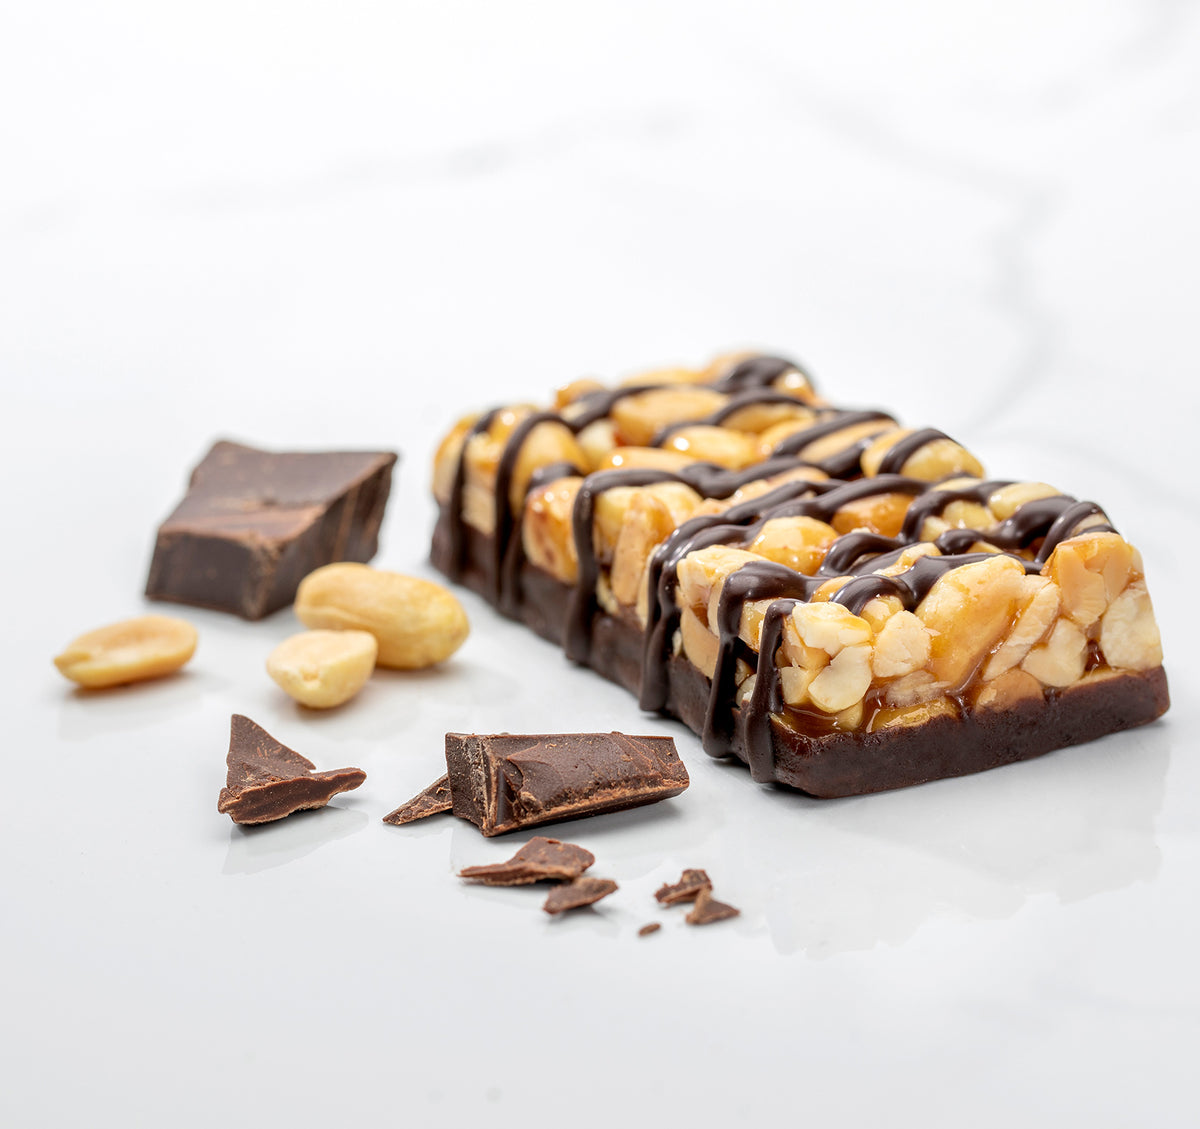 Keto Milk Chocolate Peanut Bites 3 Pack – Sweetwell Store